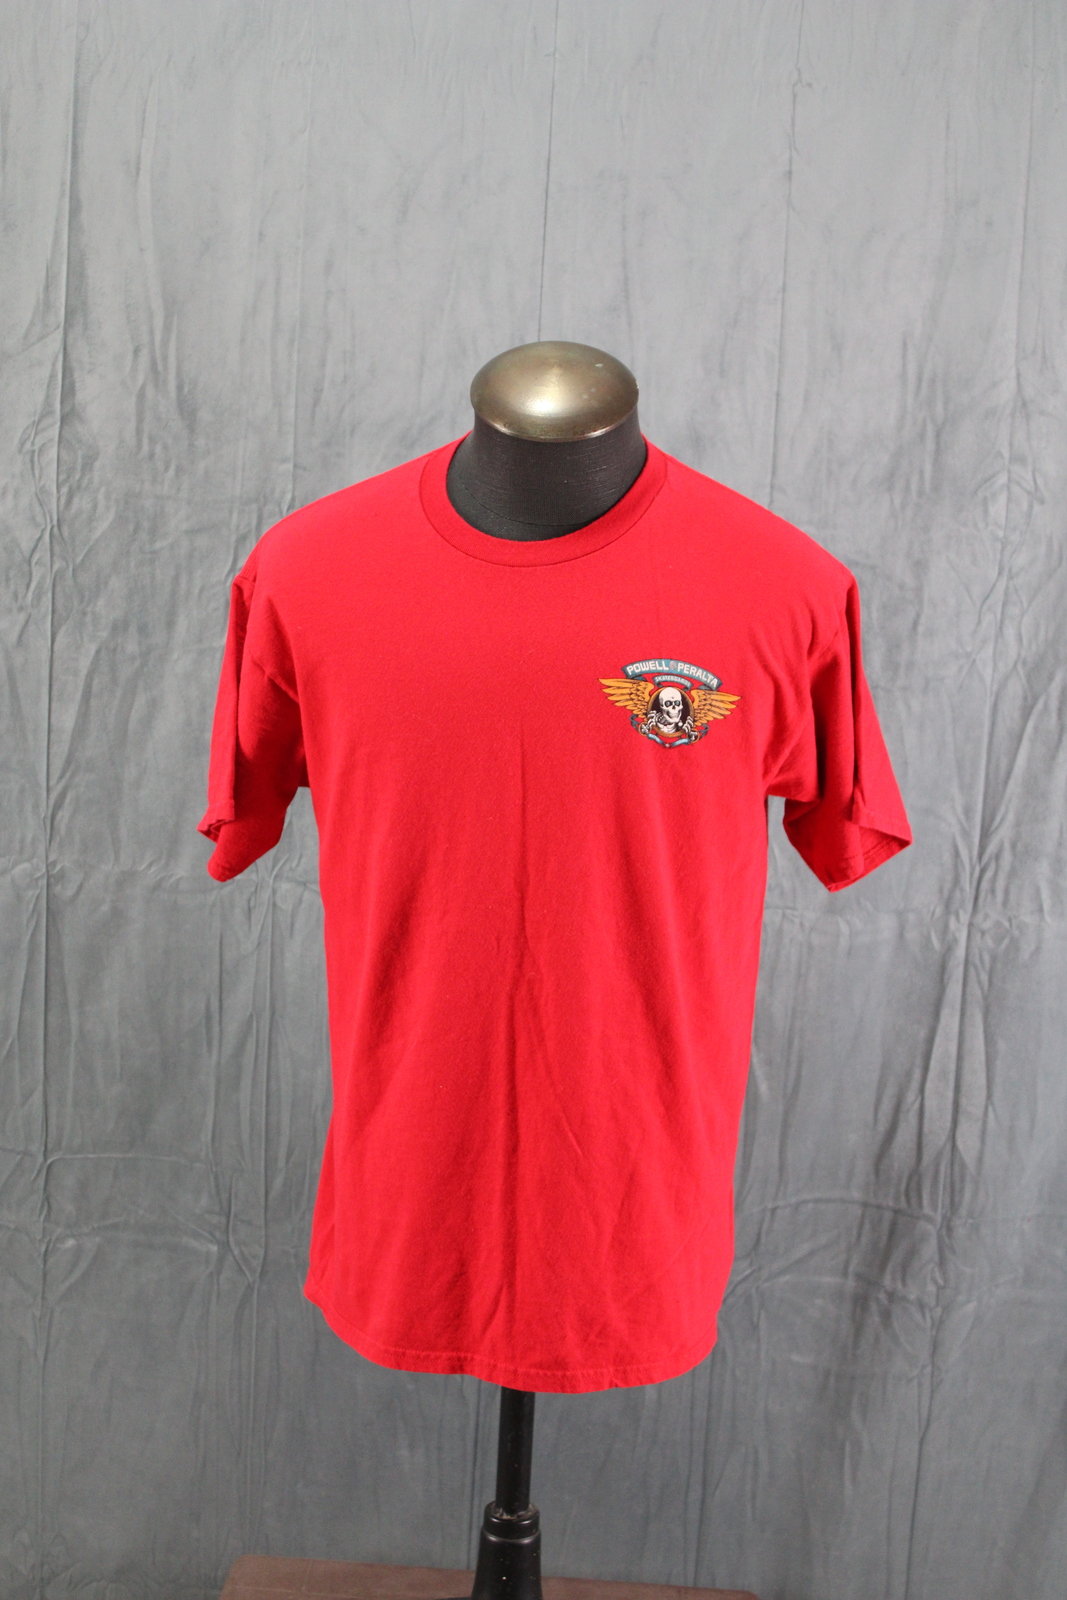 Powell Peralta Shirt -  Skeleton Ripper Logo on Red Shirt - Men's Large - $45.00